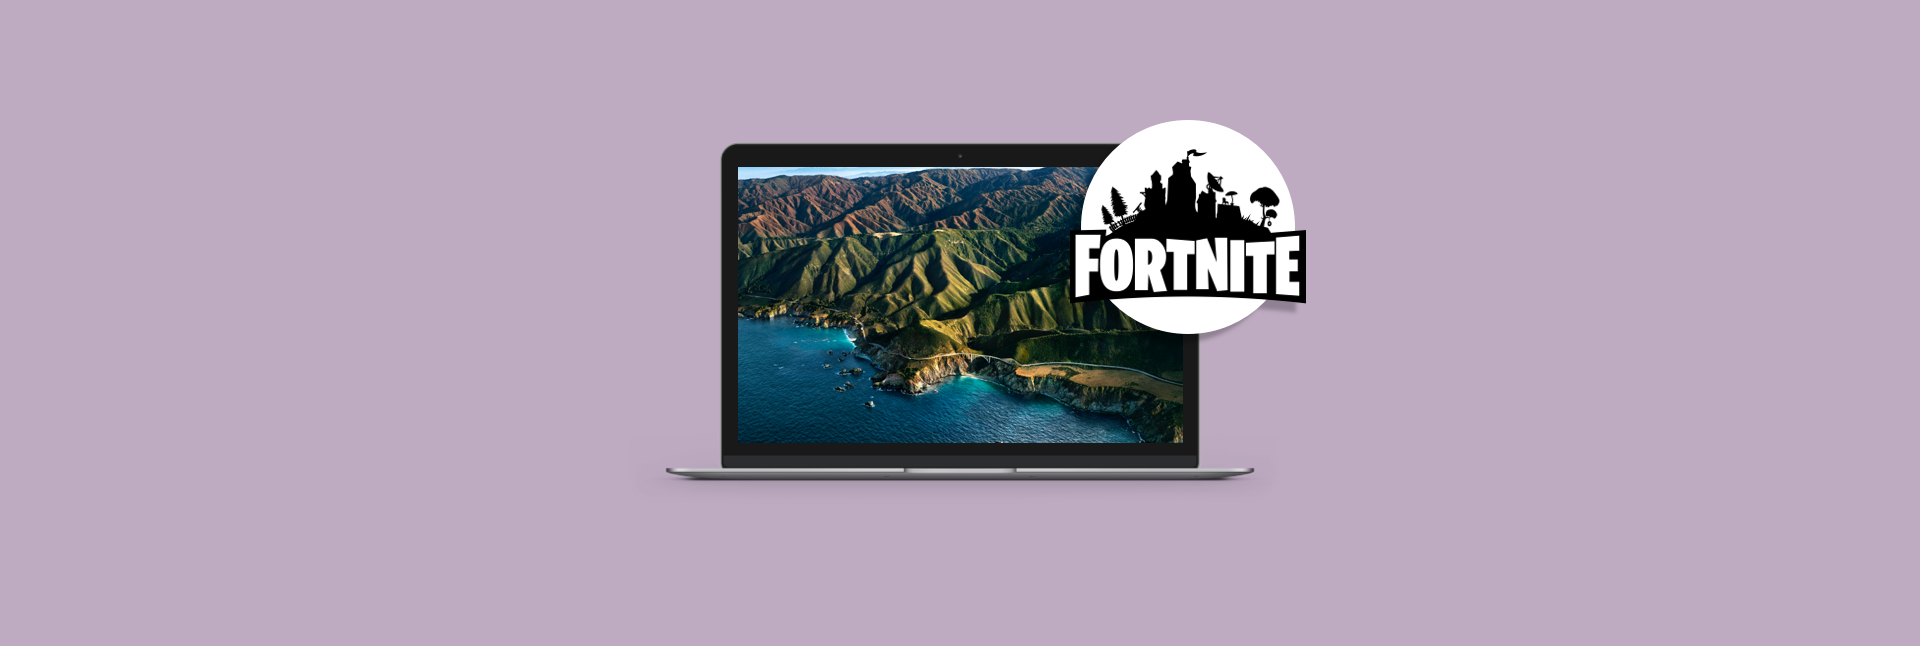 fortnite working for mac laptops